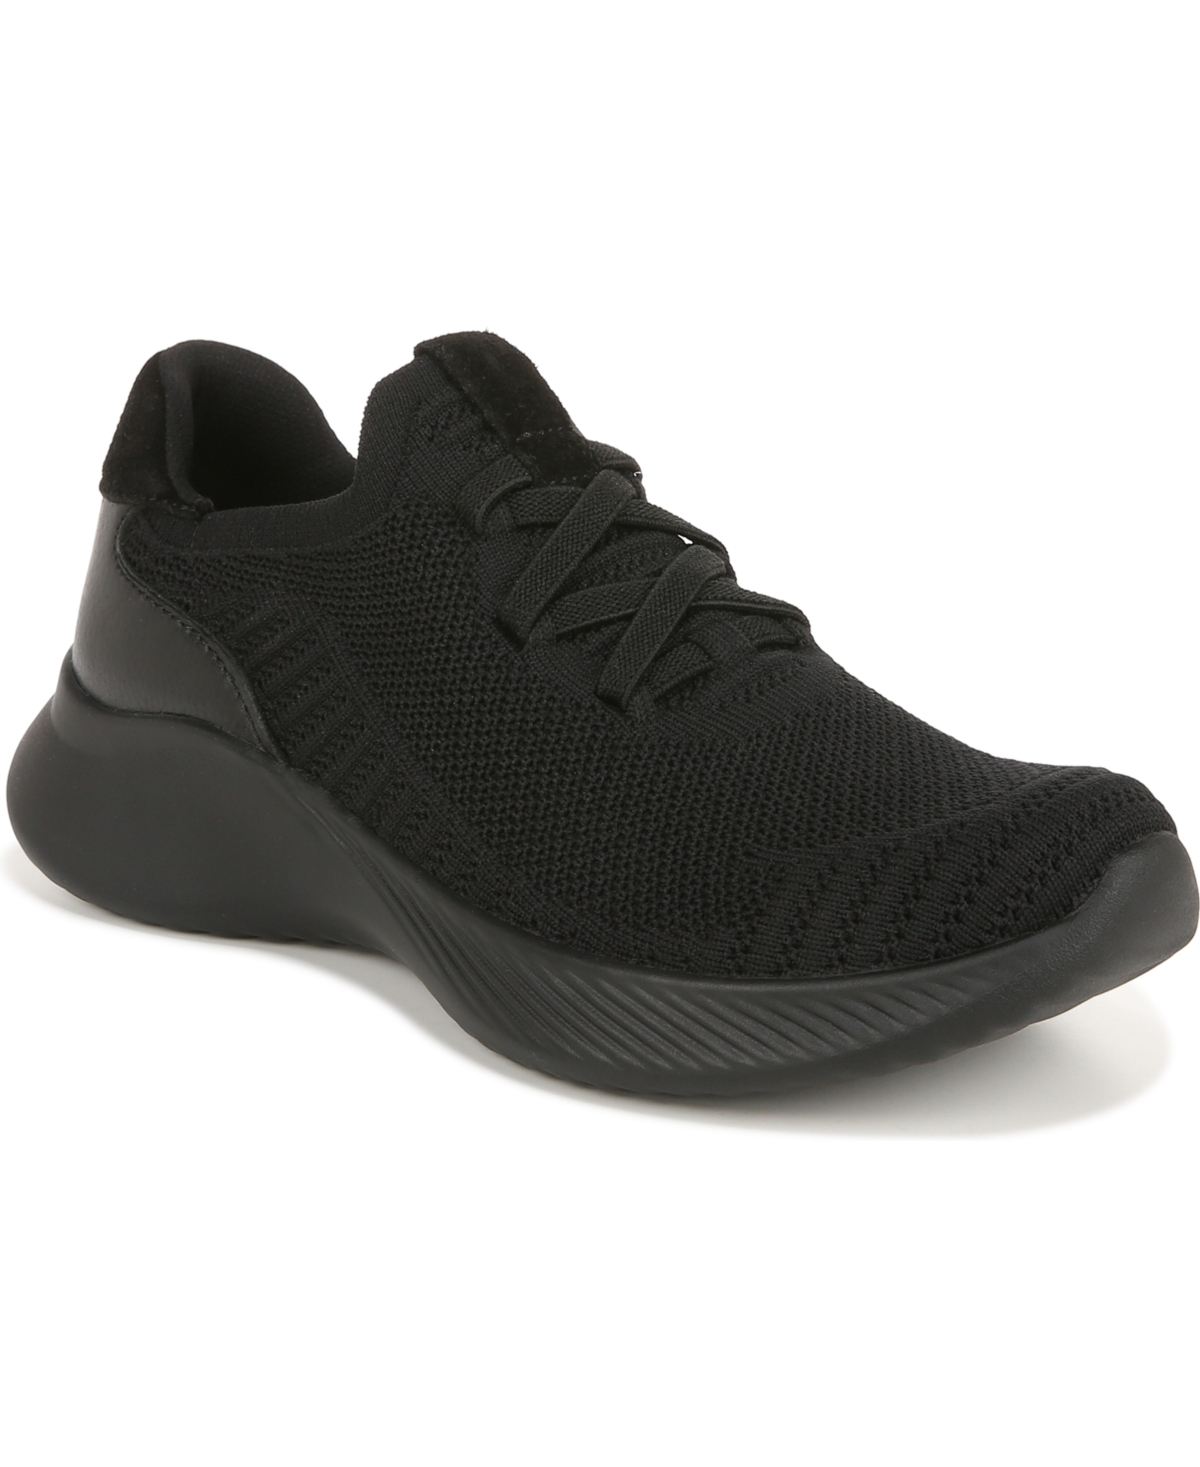 Emerge Slip-on Sneakers - Black/White Flyknit Fabric